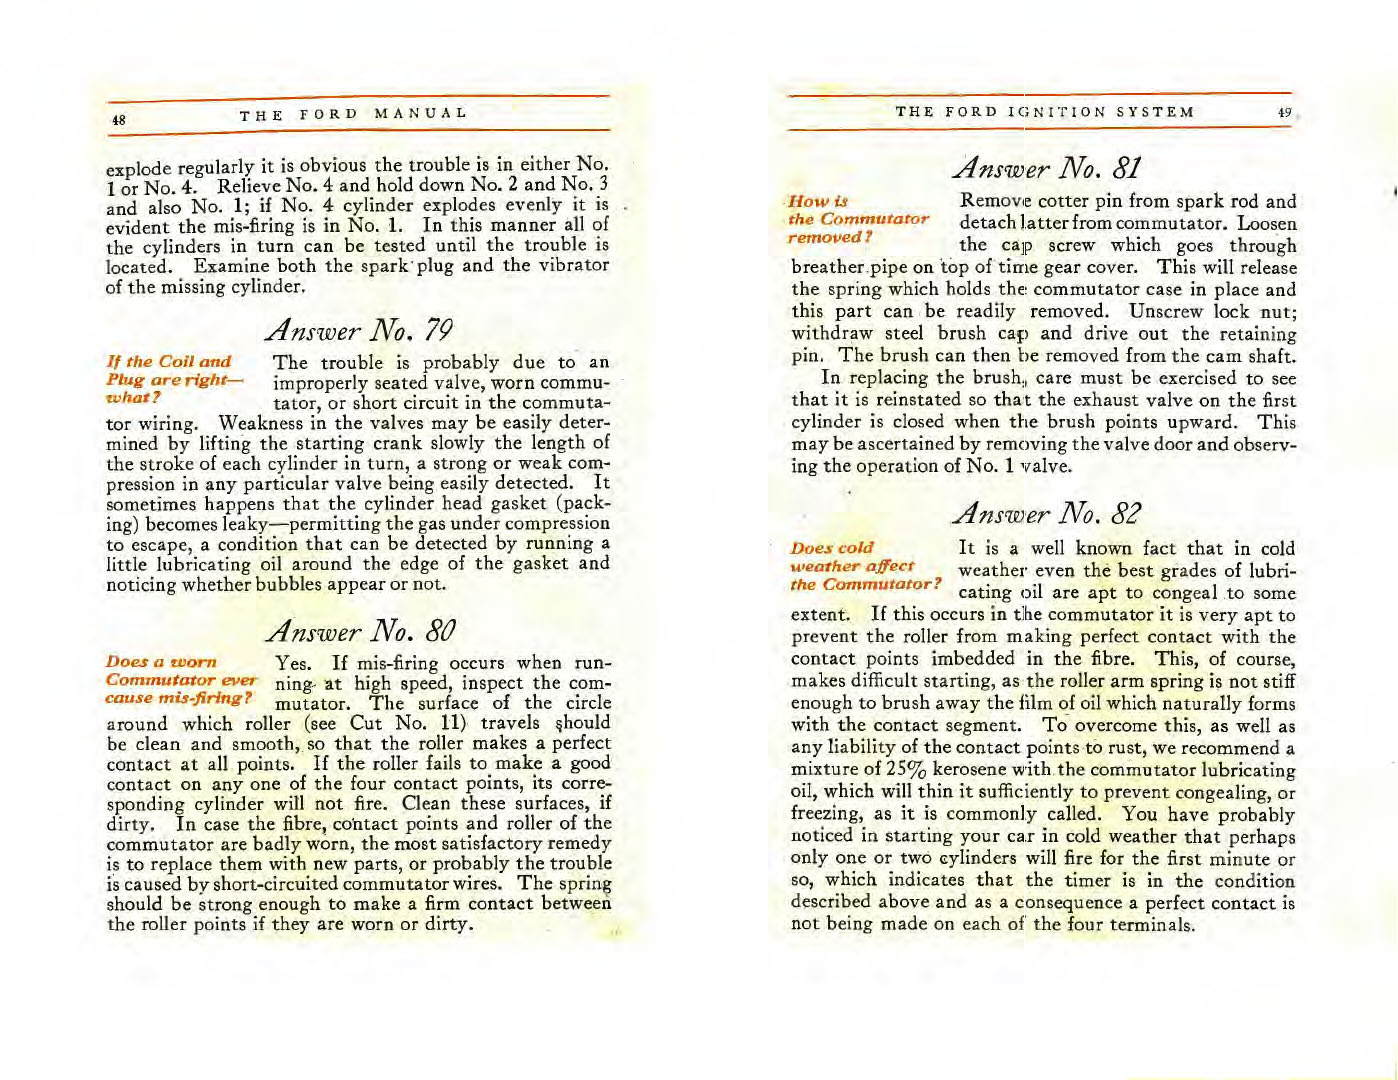 n_1915 Ford Owners Manual-48-49.jpg